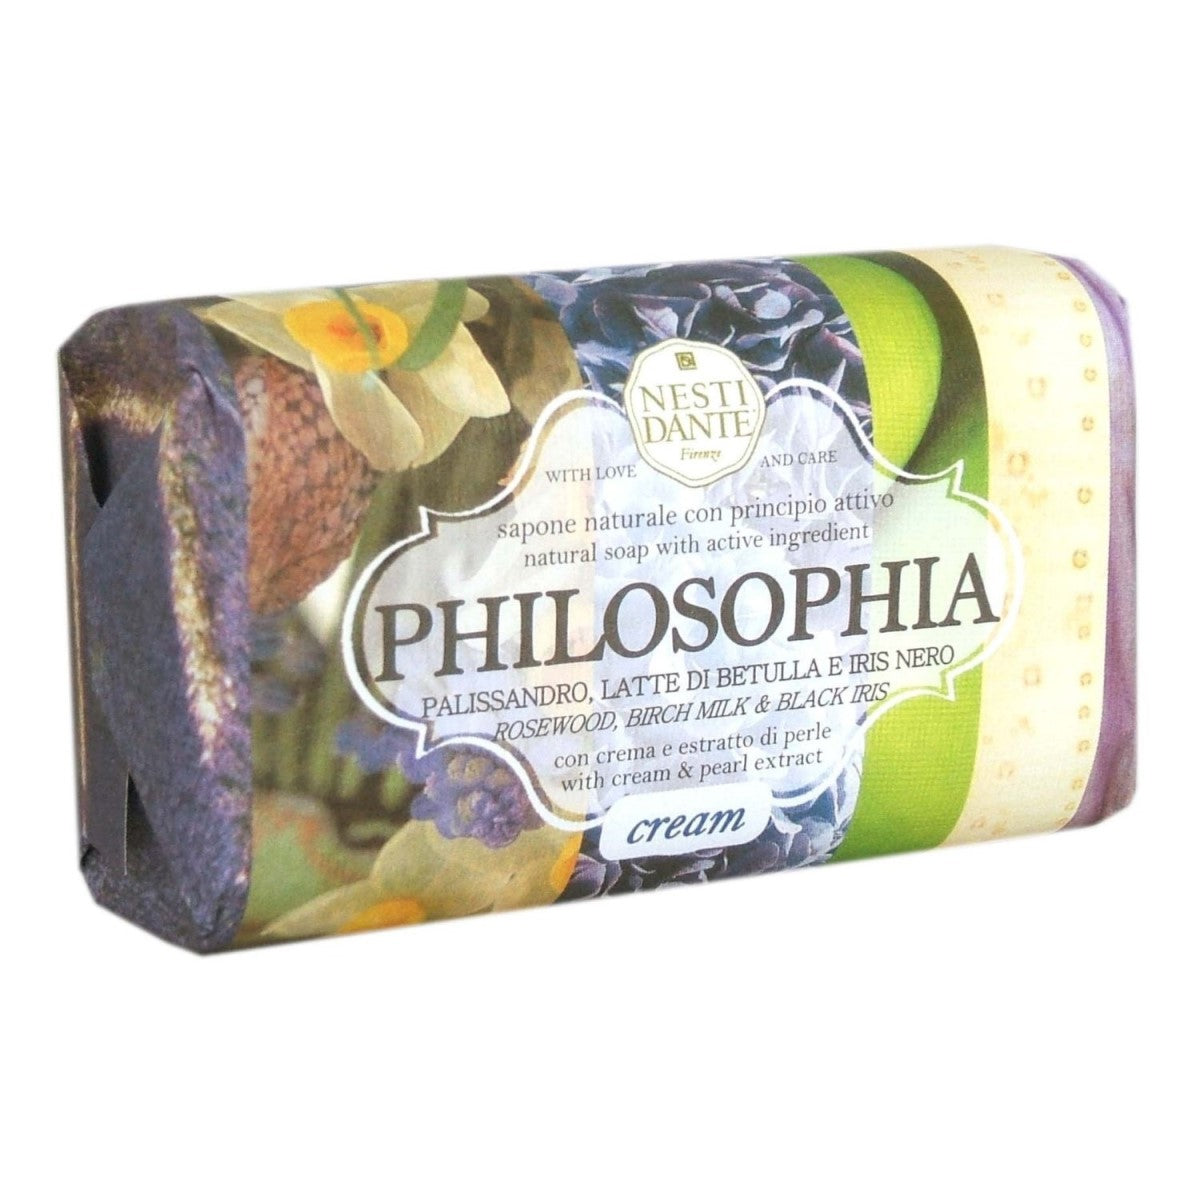 Primary Image of Philosophia Cream Soap